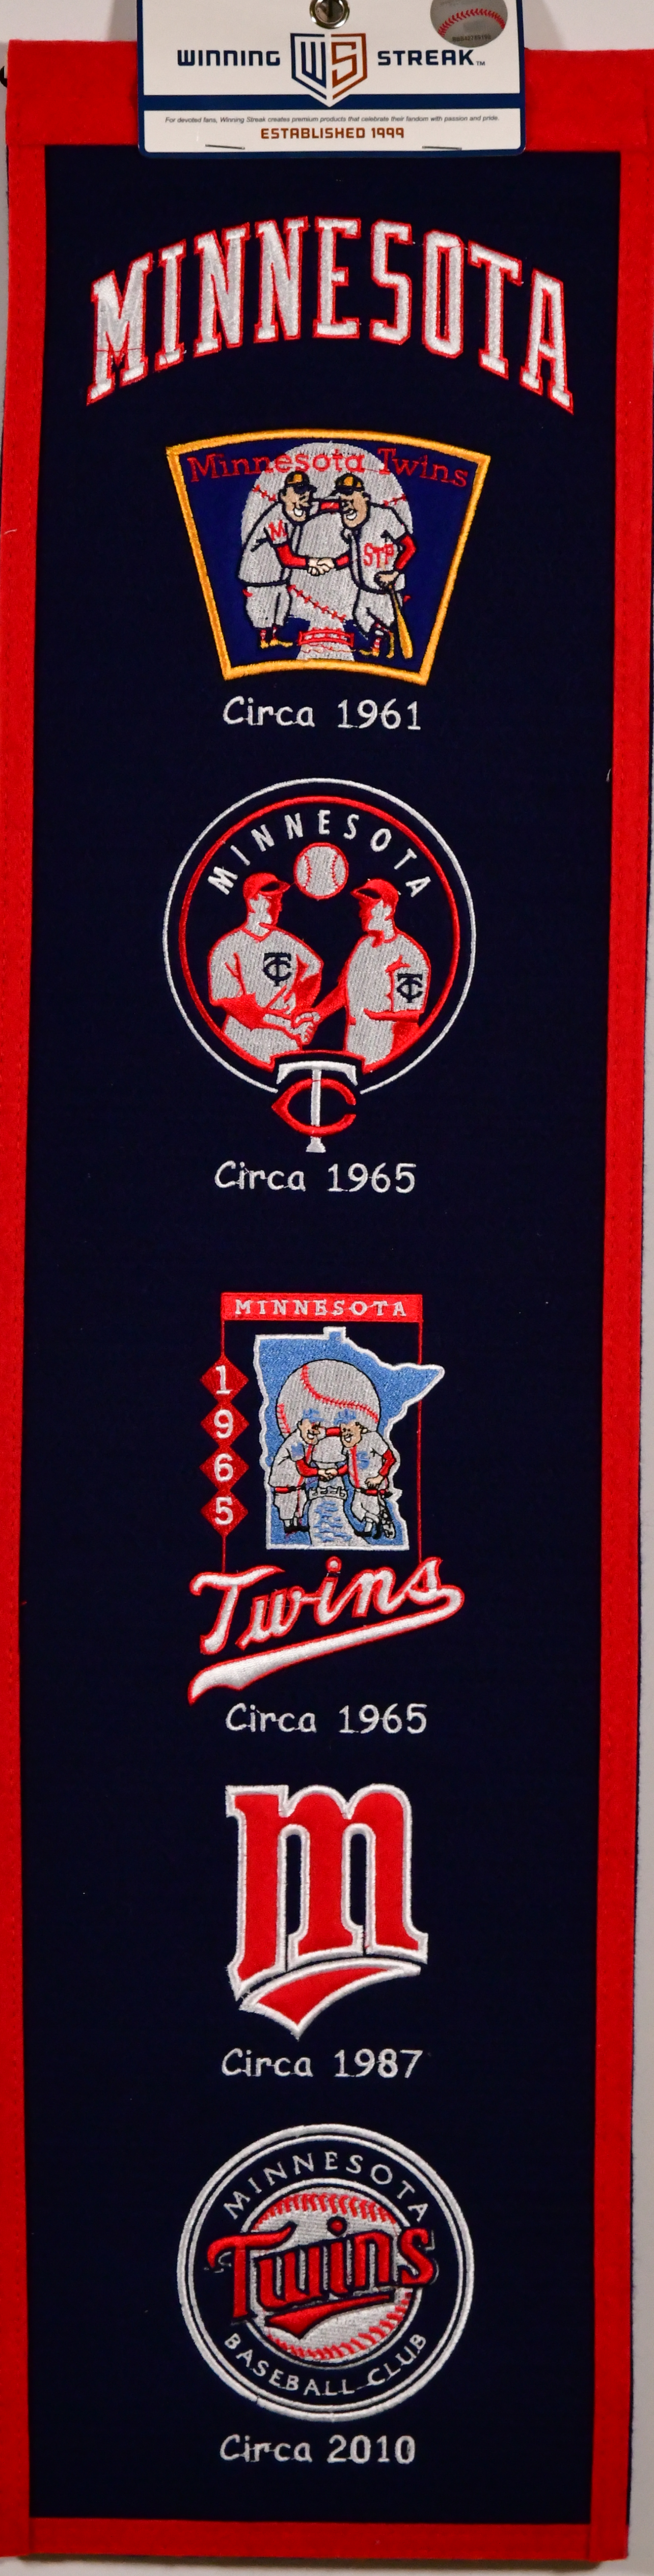 Minnesota Twins Heritage Banner